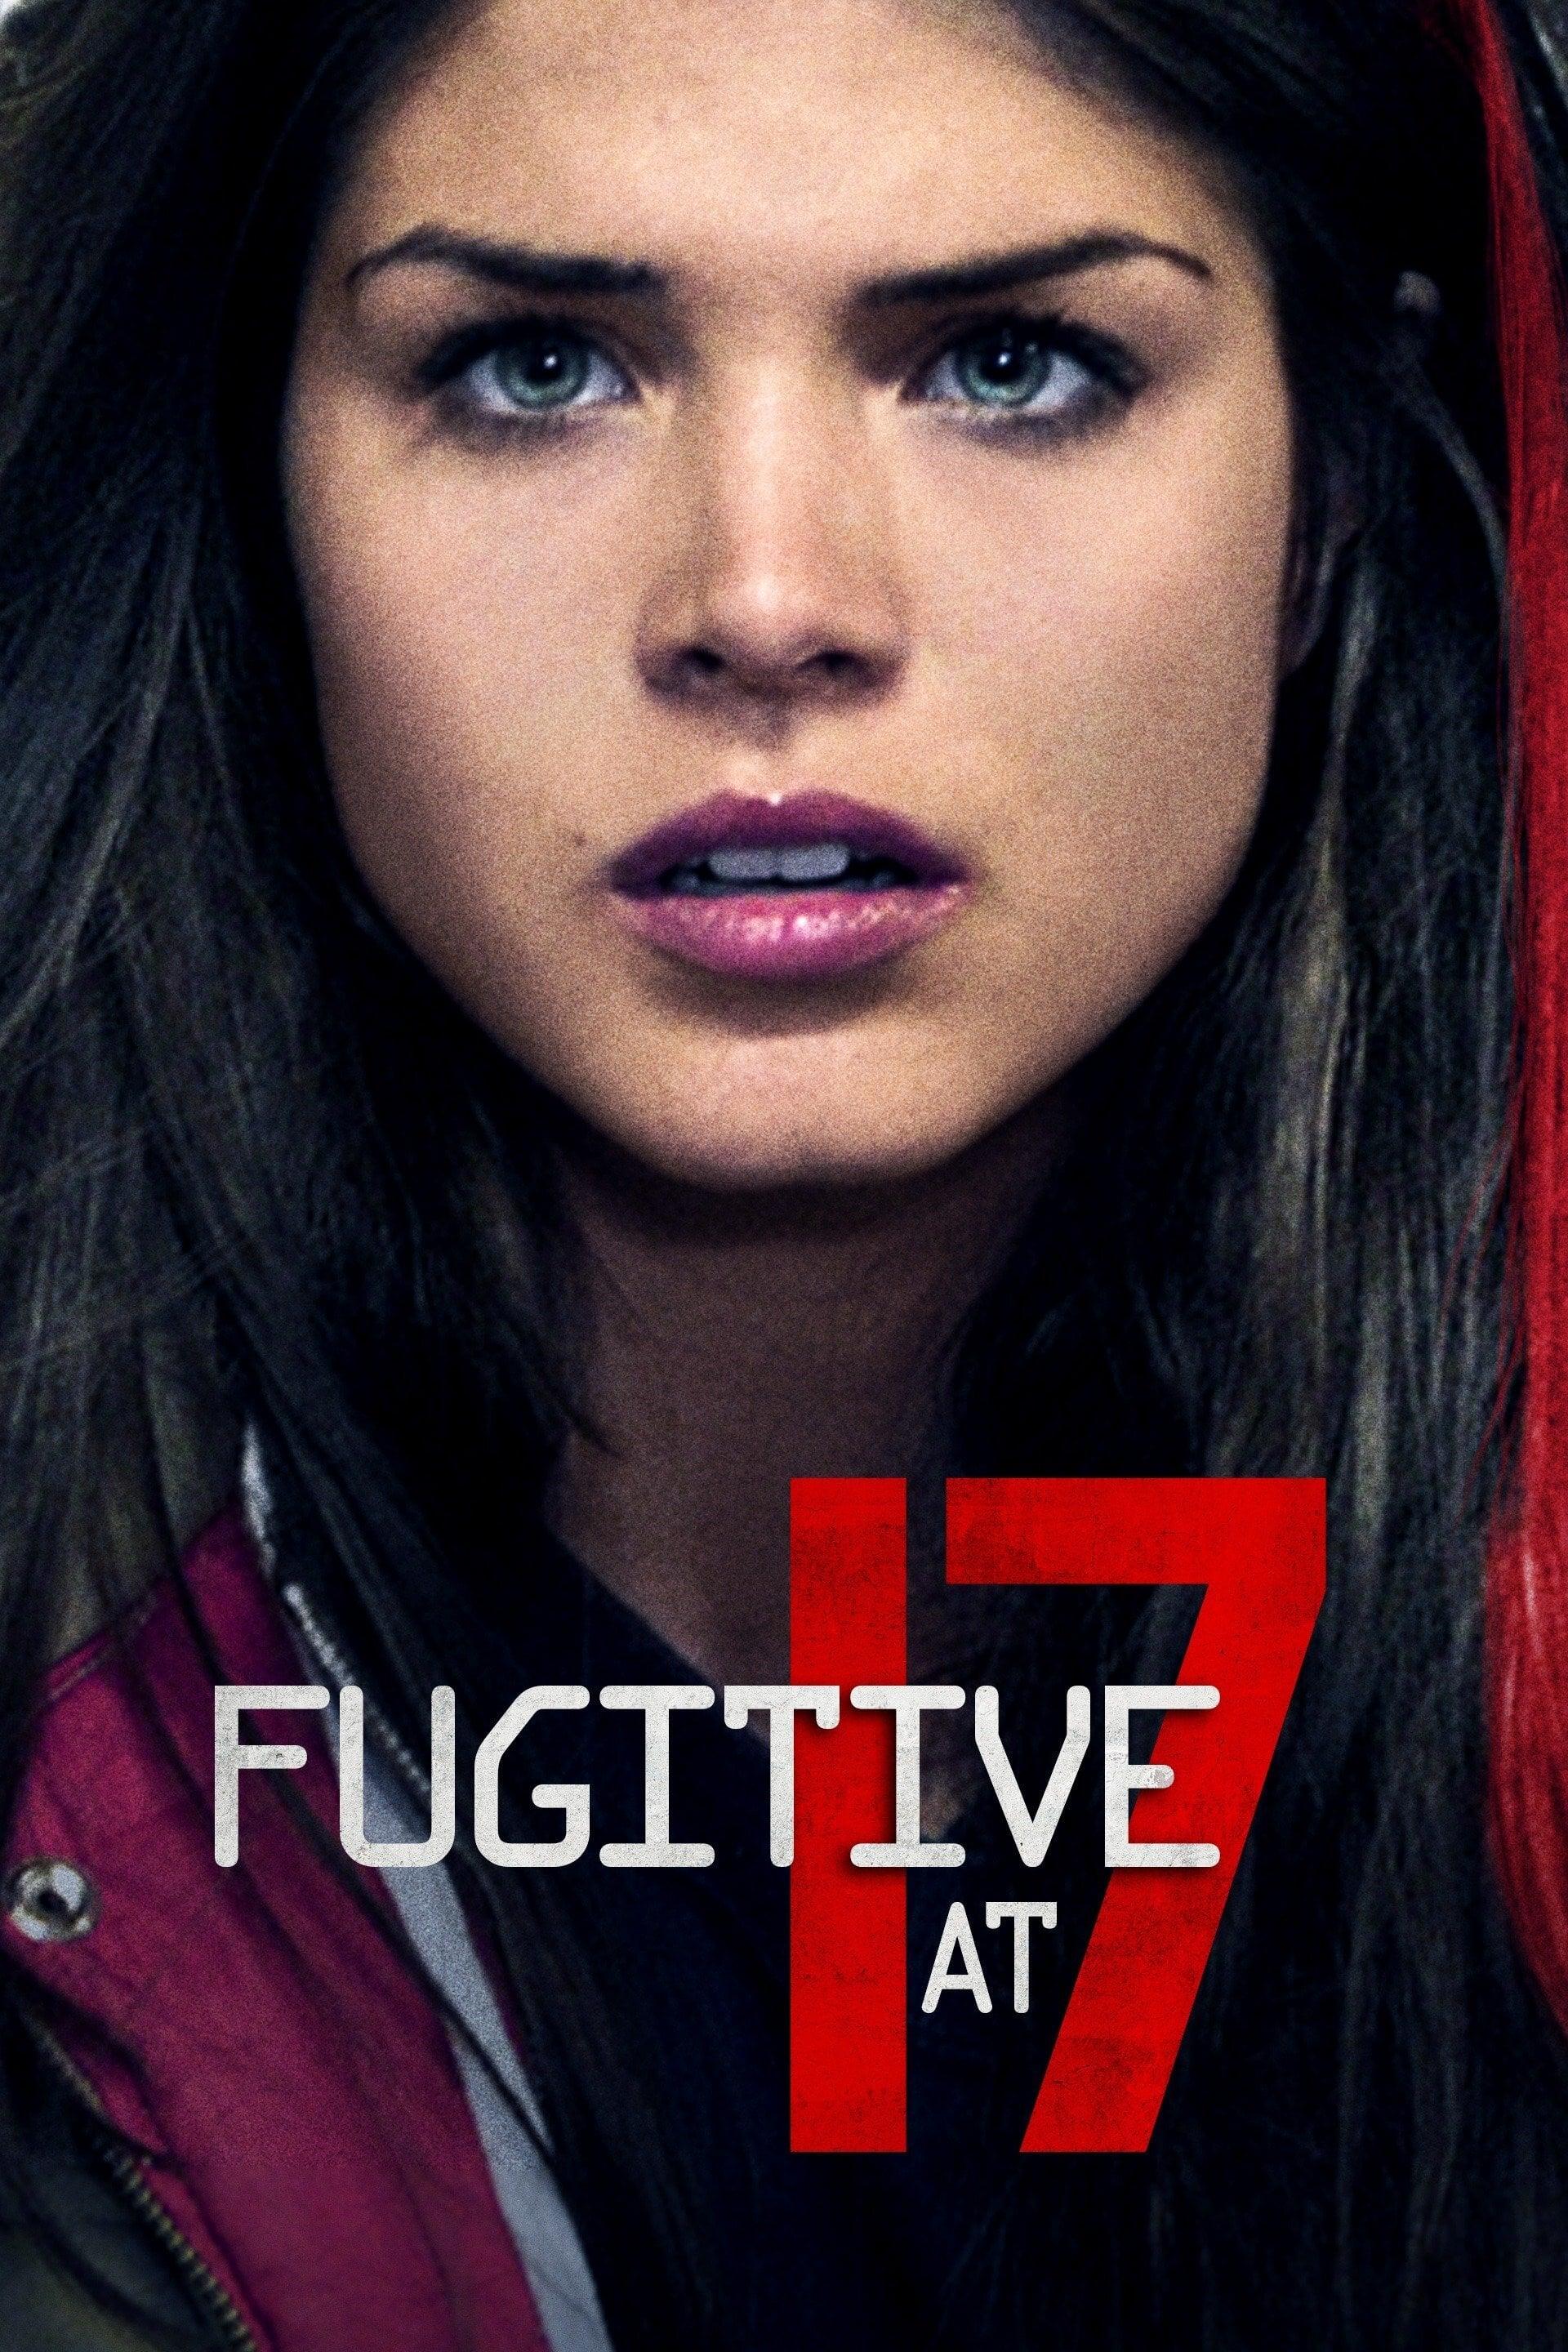 Fugitive at 17 poster